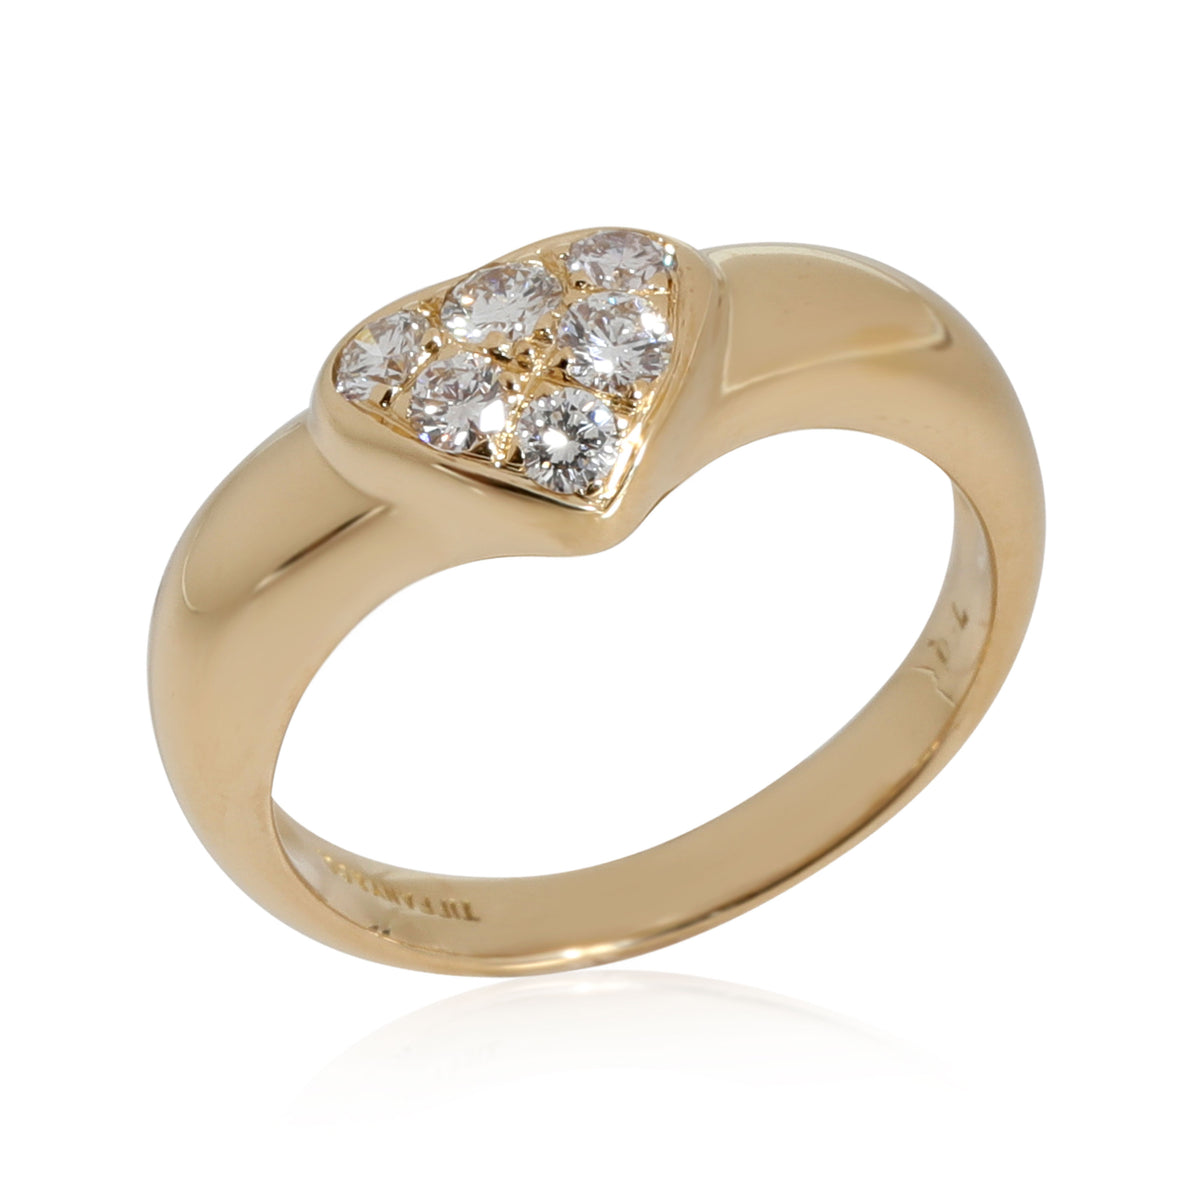 Tiffany & Co. Diamond Heart Ring in 18k Yellow Gold 0.22 CTW